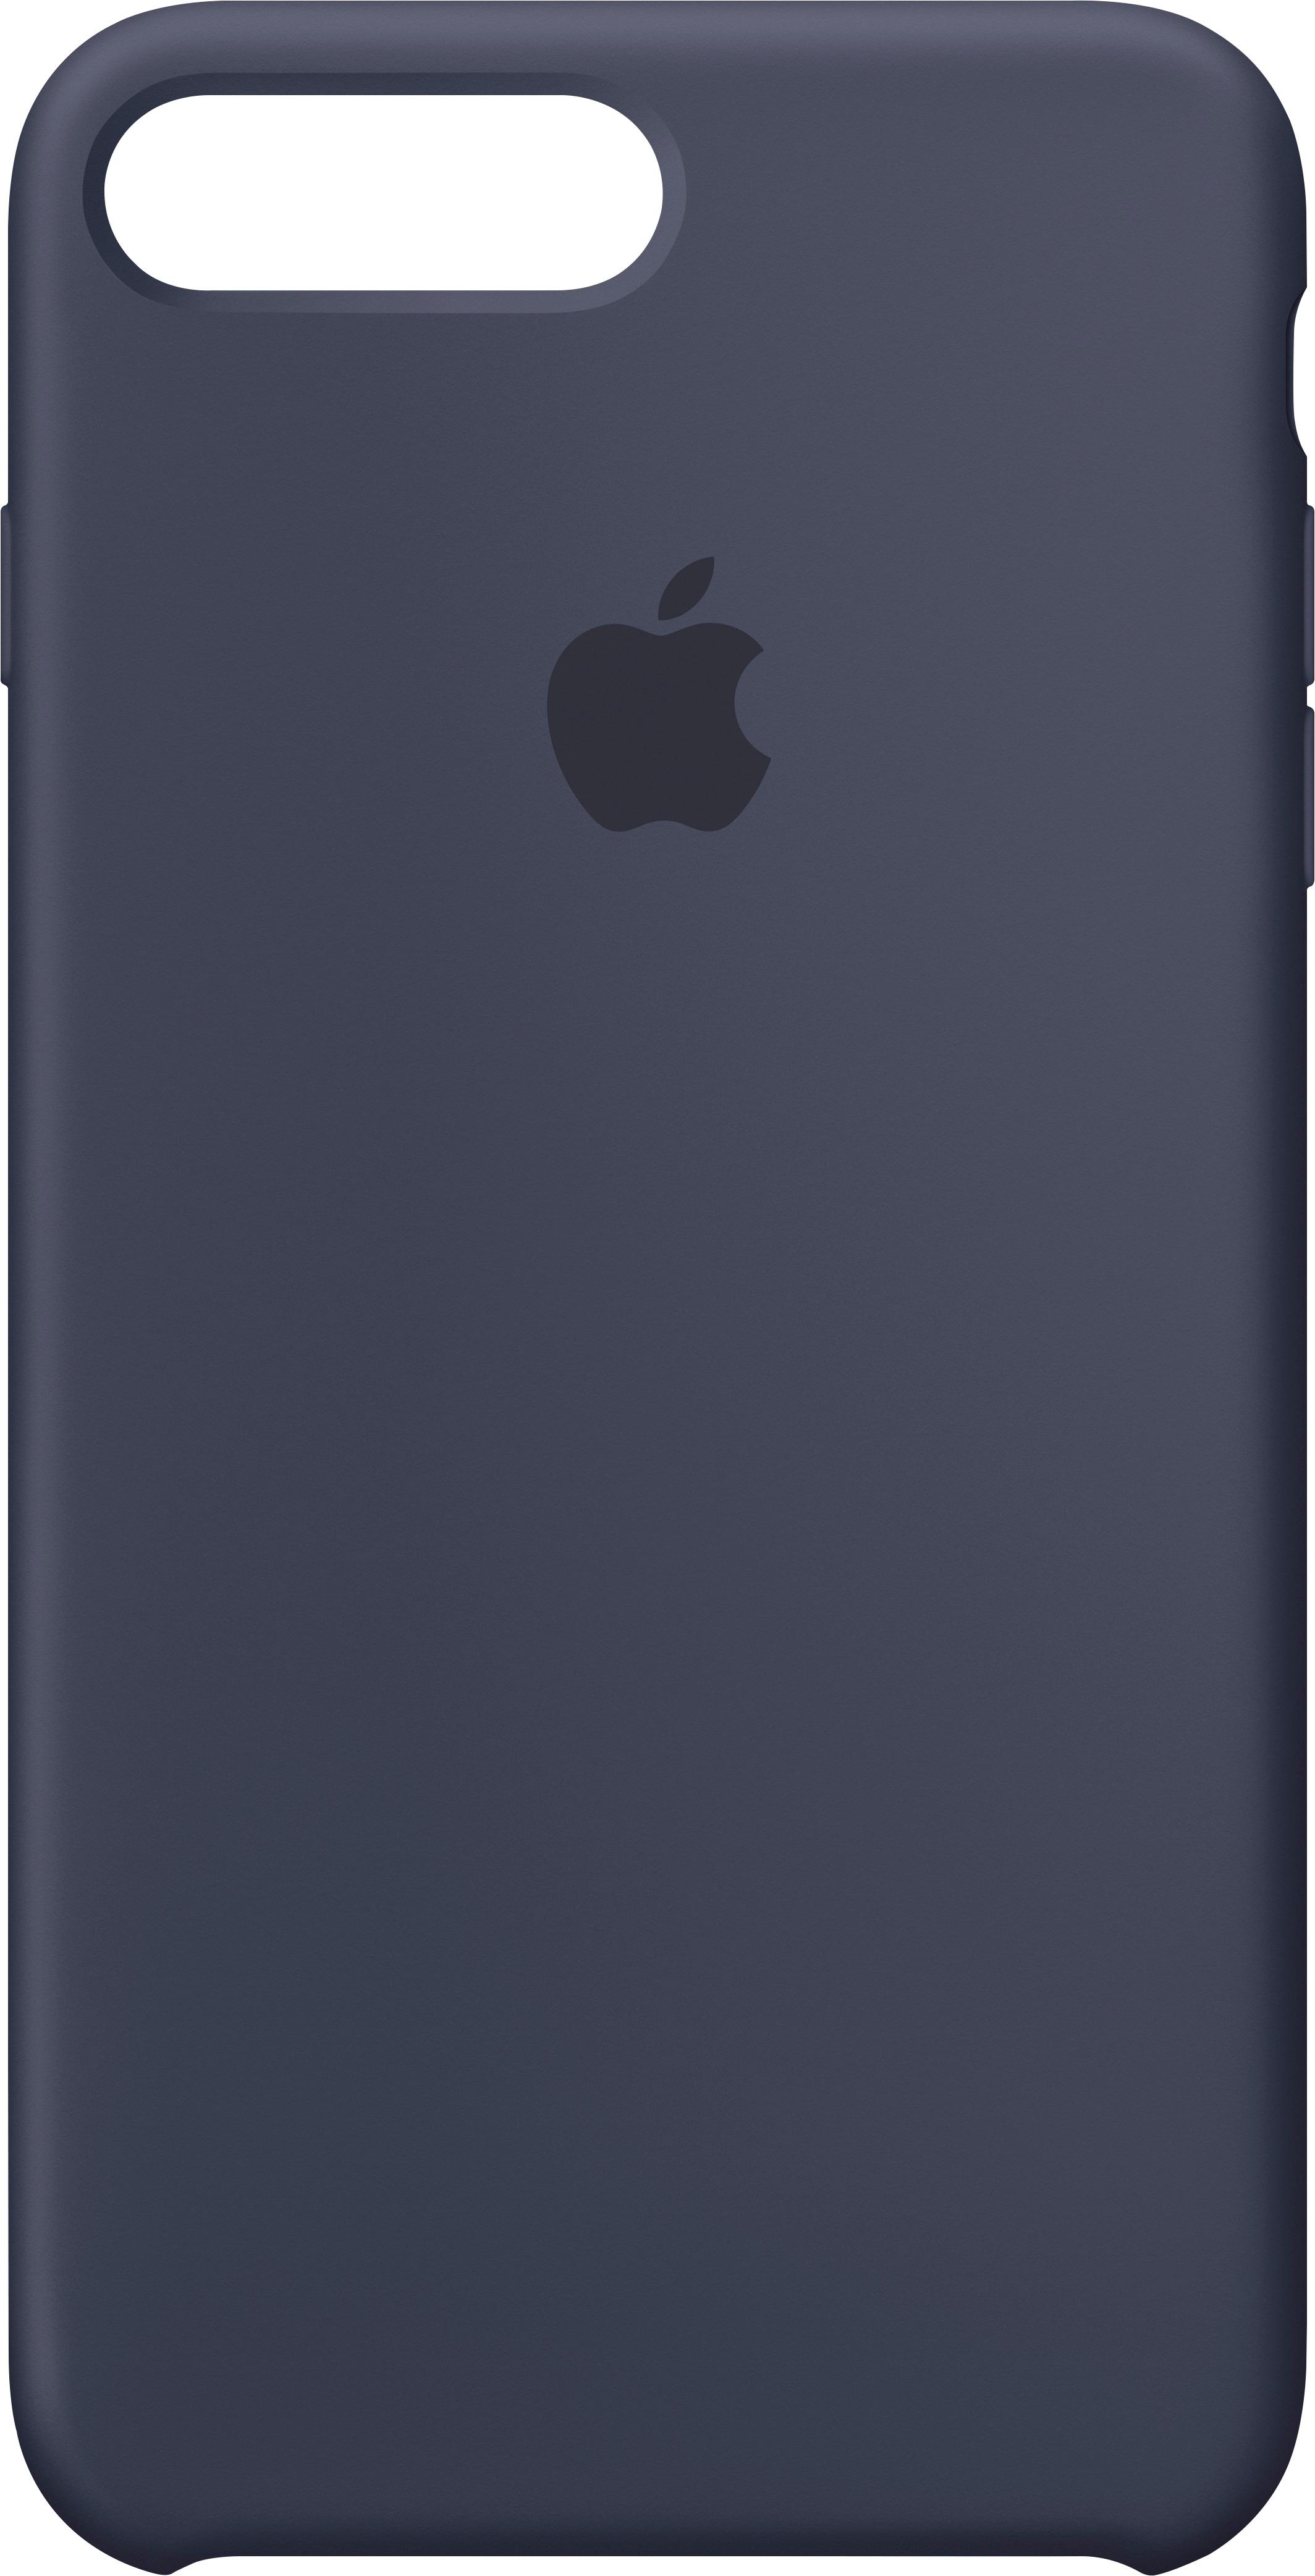 Apple iPhone® 8 Plus/7 Plus Silicone Case Midnight Blue - Best Buy